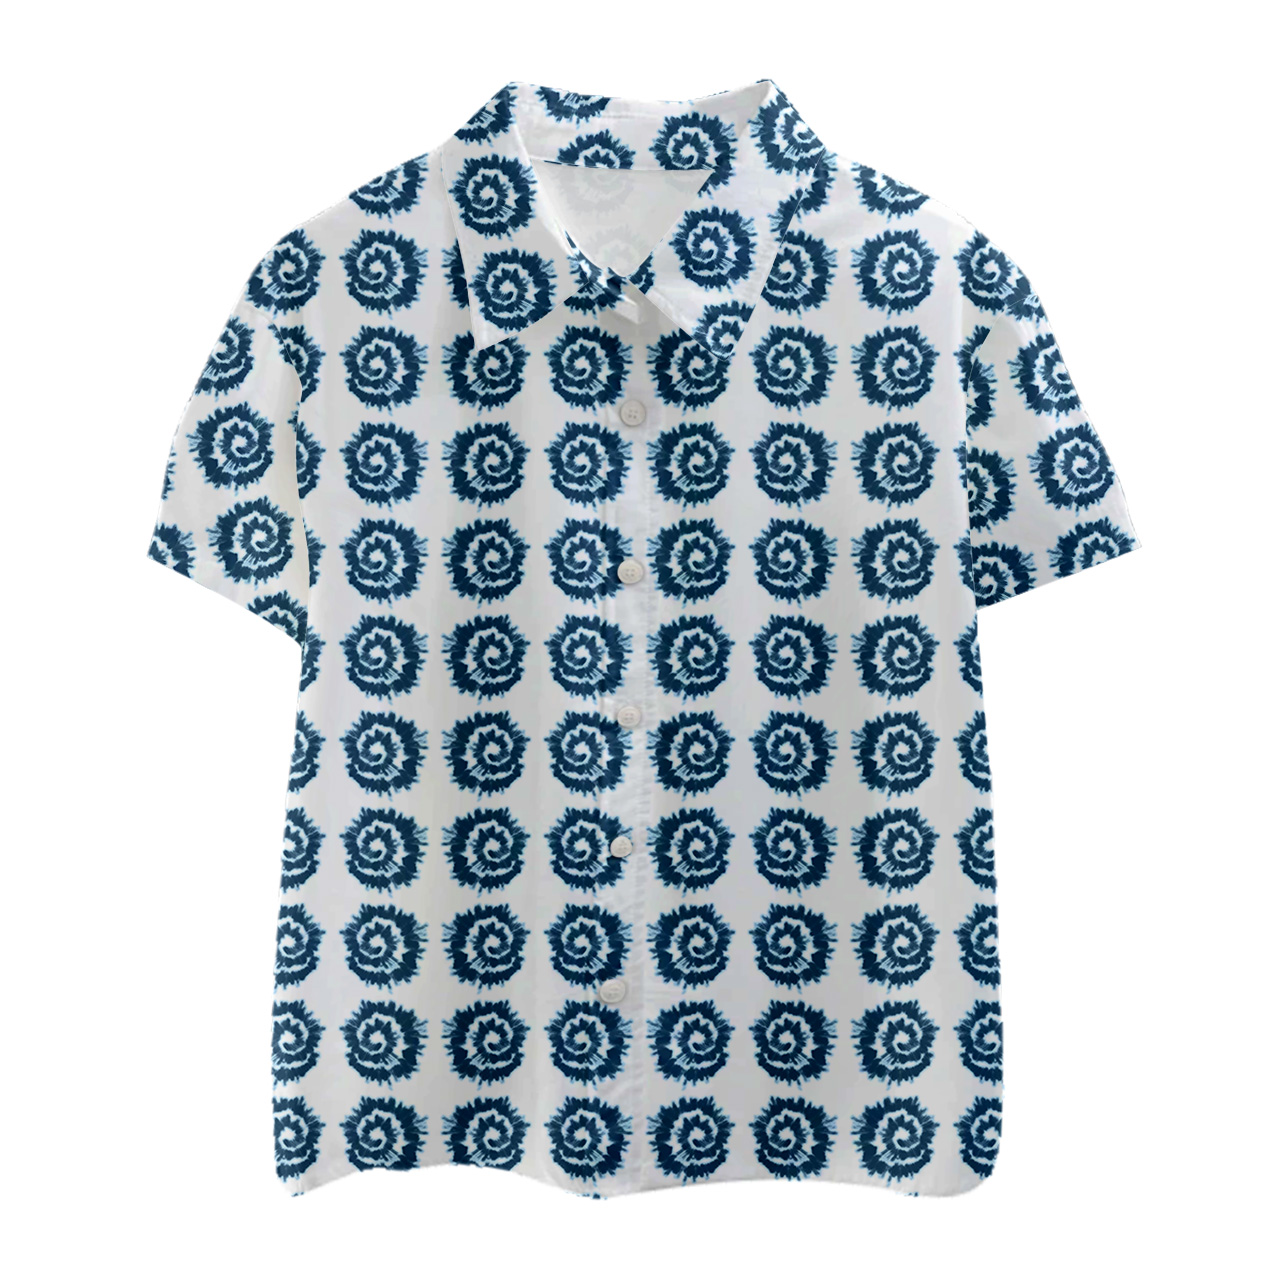 Small Blue Swirl Tie Dye Kids Button Shirt